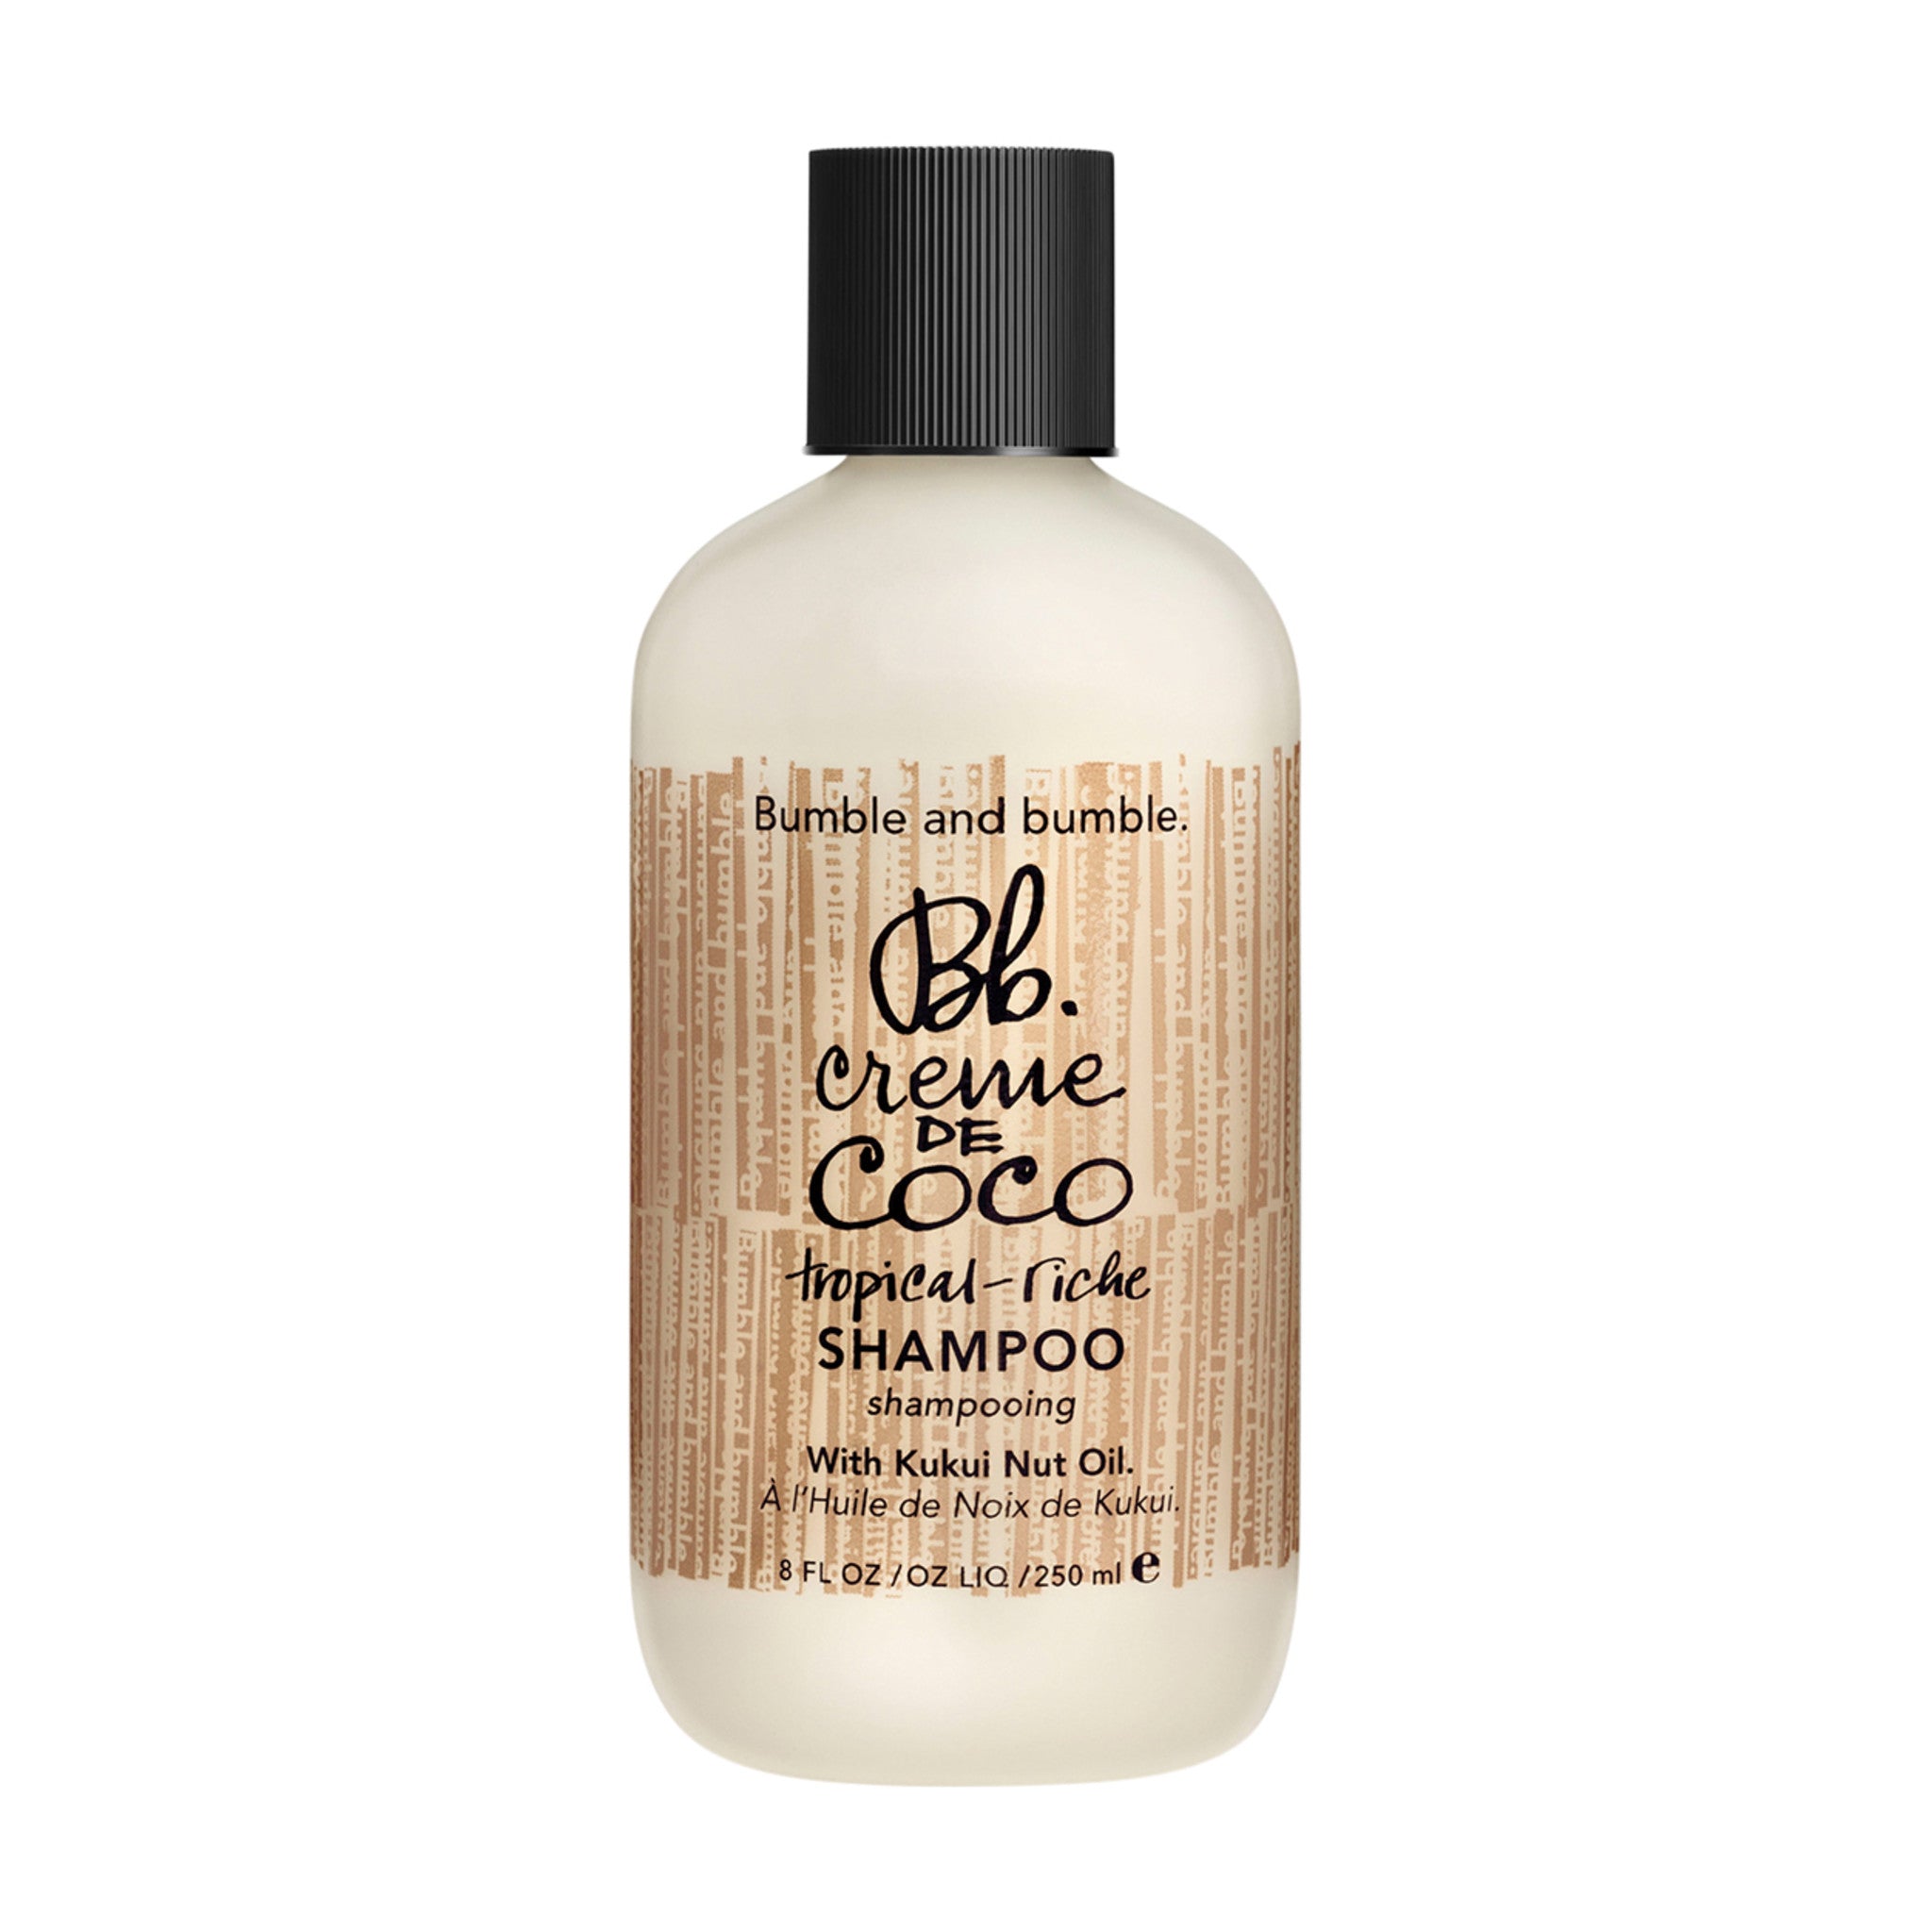 Bumble and Bumble Creme de Coco Shampoo Size variant: 8 Oz. main image.